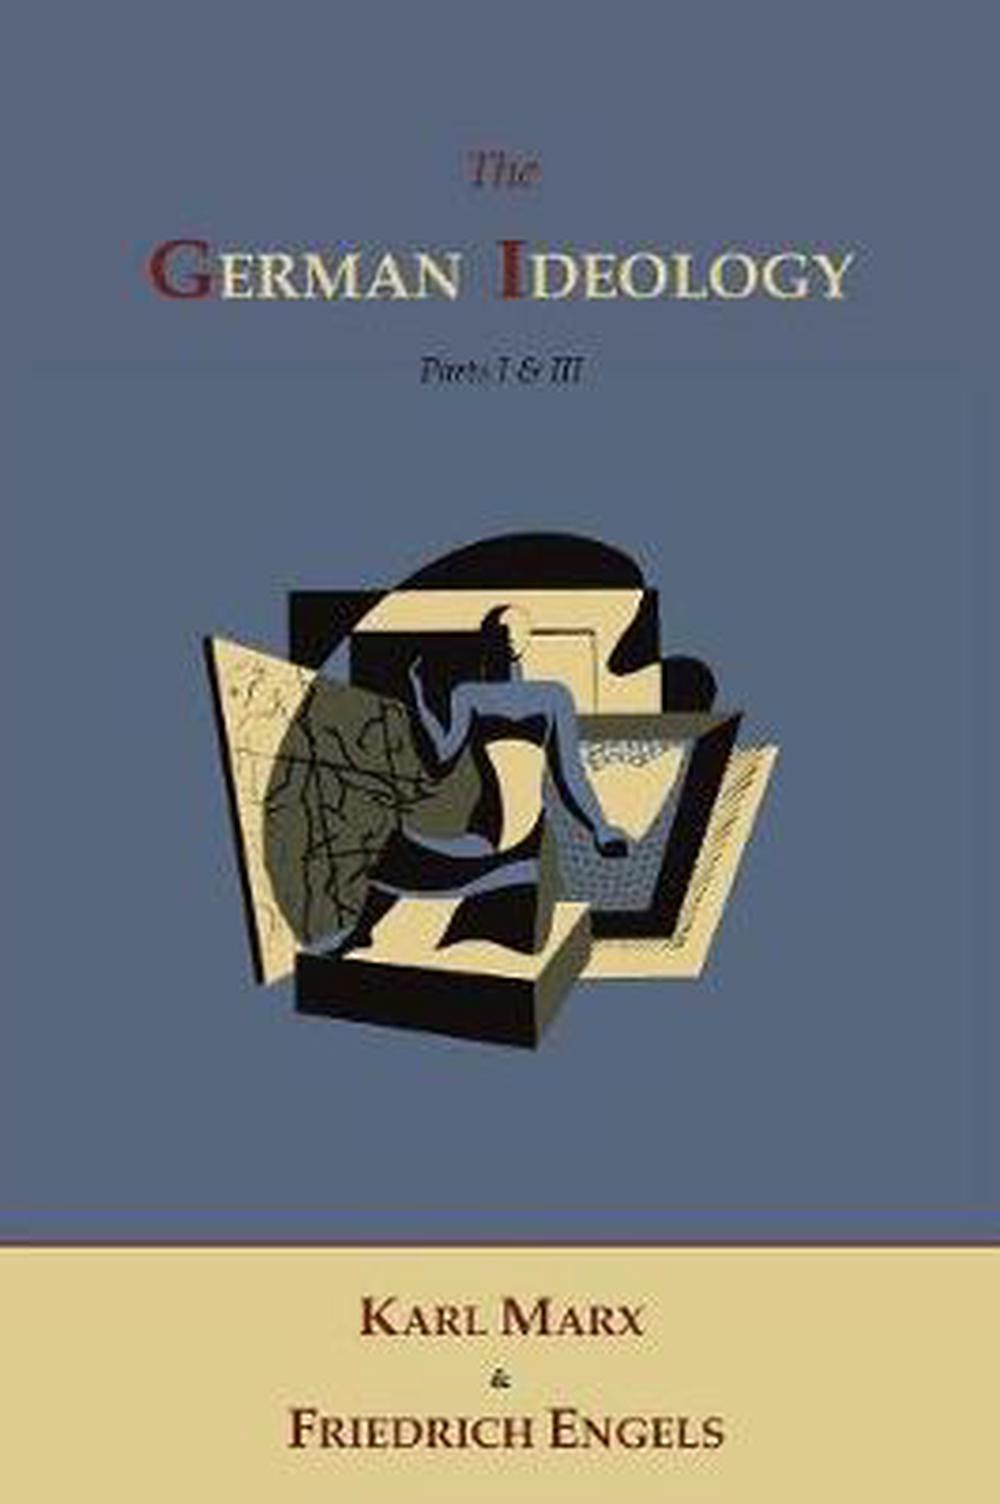 karl marx the german ideology pdf